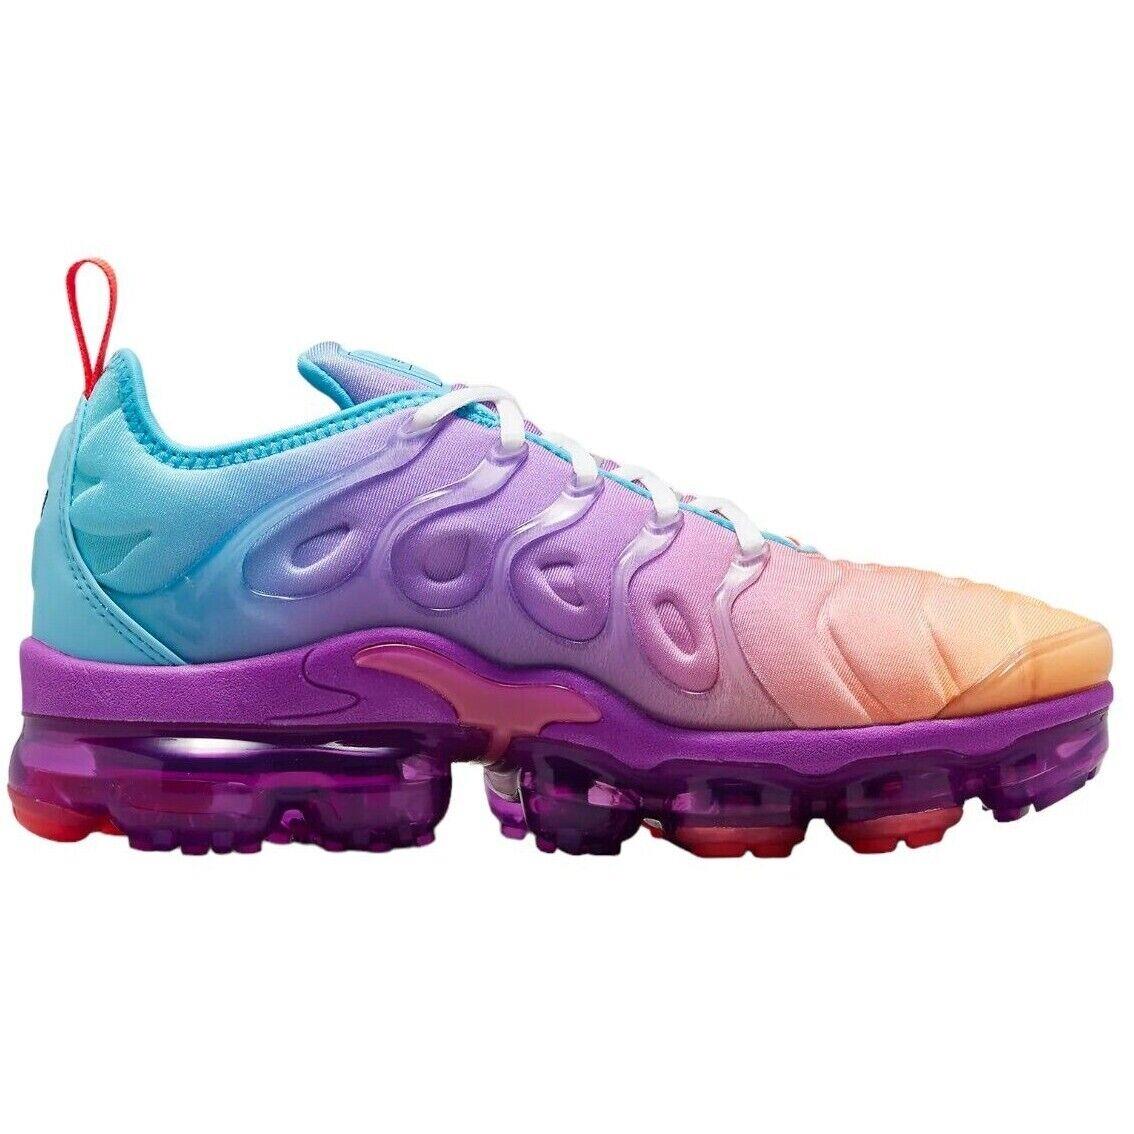 Nike Air Vapormax Plus Women`s Running Shoes All Colors US Sizes 6-11 Fuchsia Dream/Bright Crimson/Vivid Orange/Baltic B